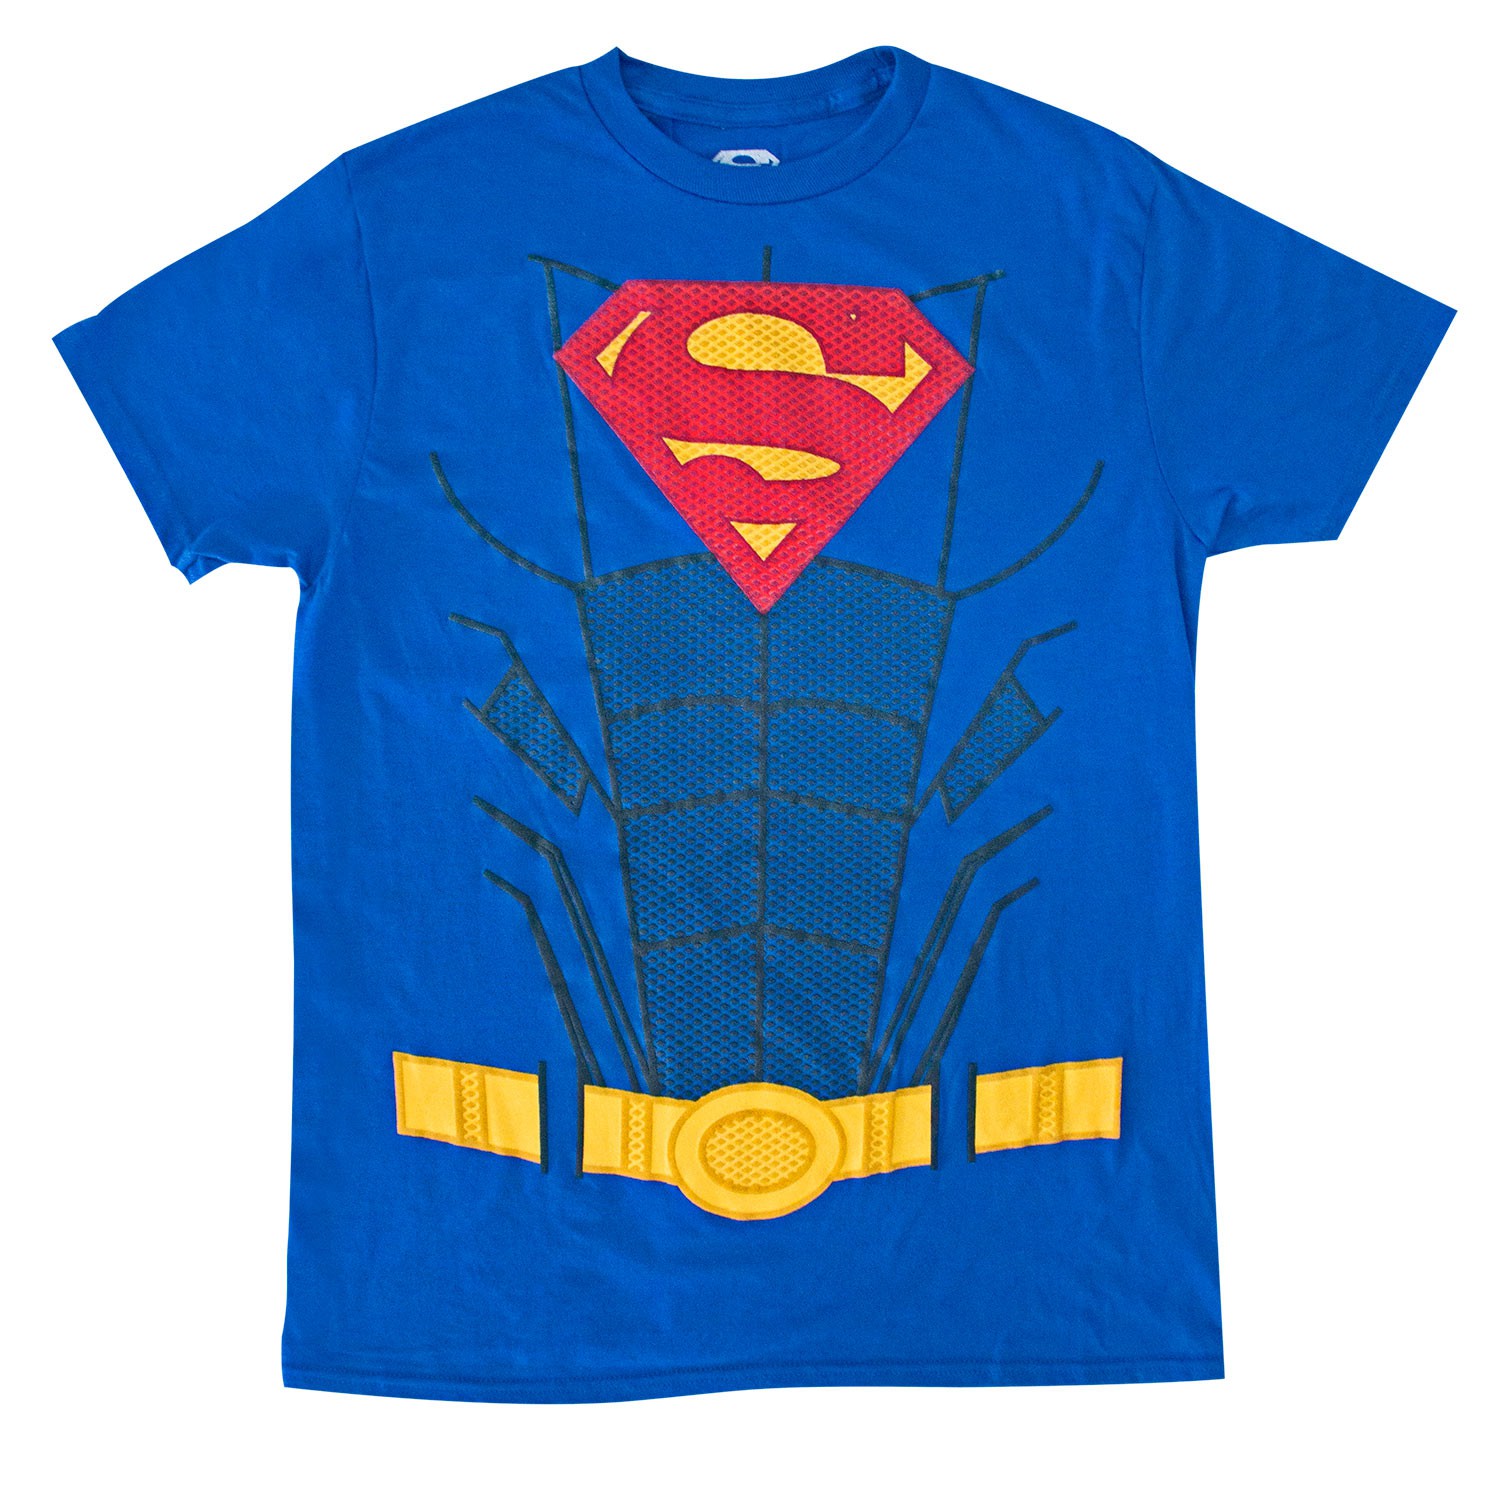 Superman Suit Up Blue Costume Tee Shirt